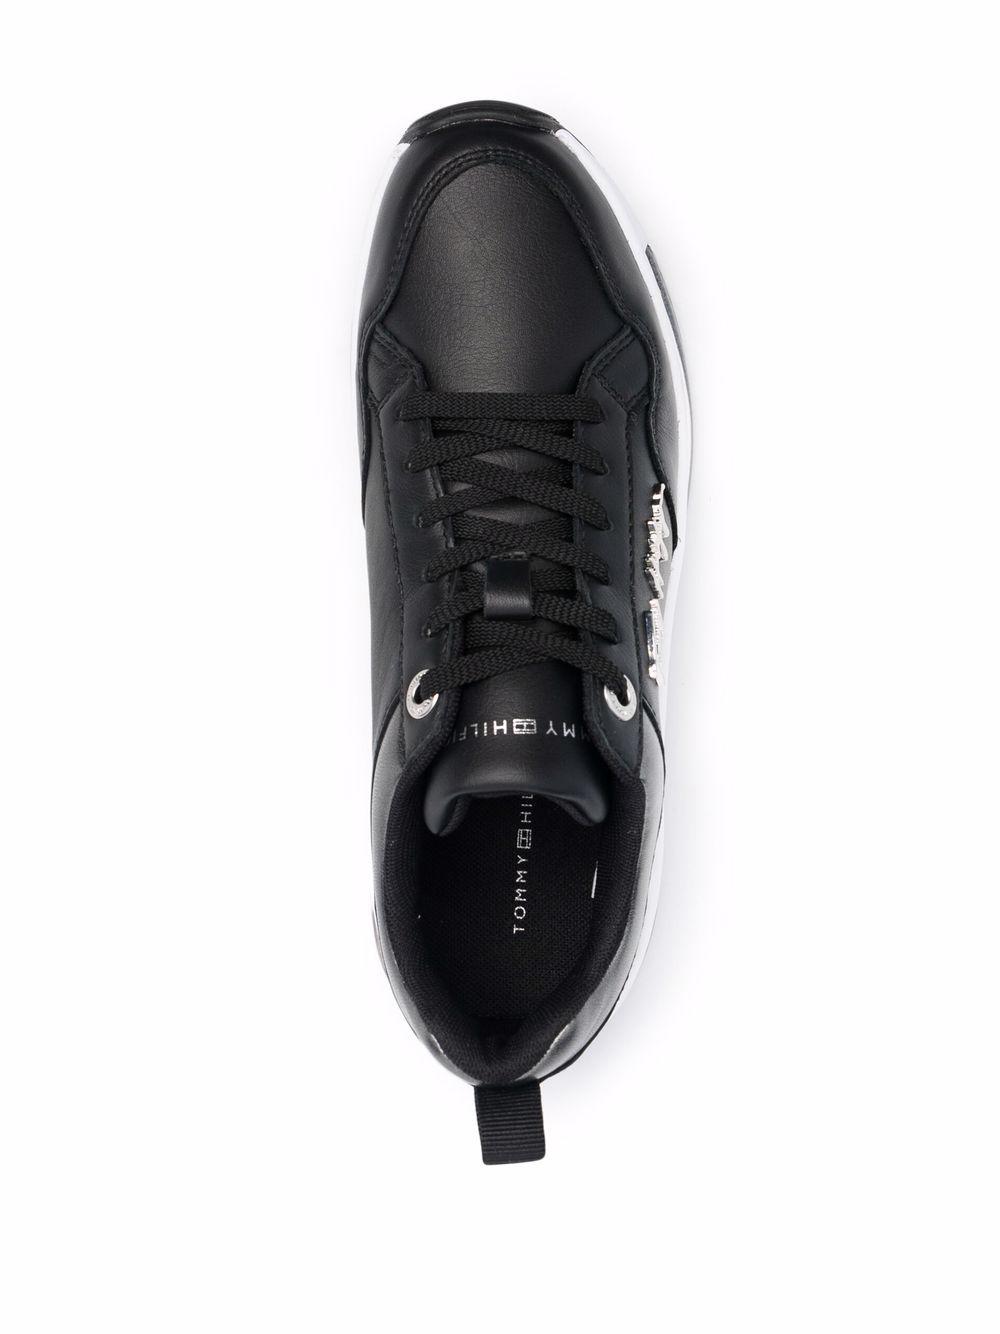 Tommy Hilfiger City Air Runner Sneakers in Black | Lyst